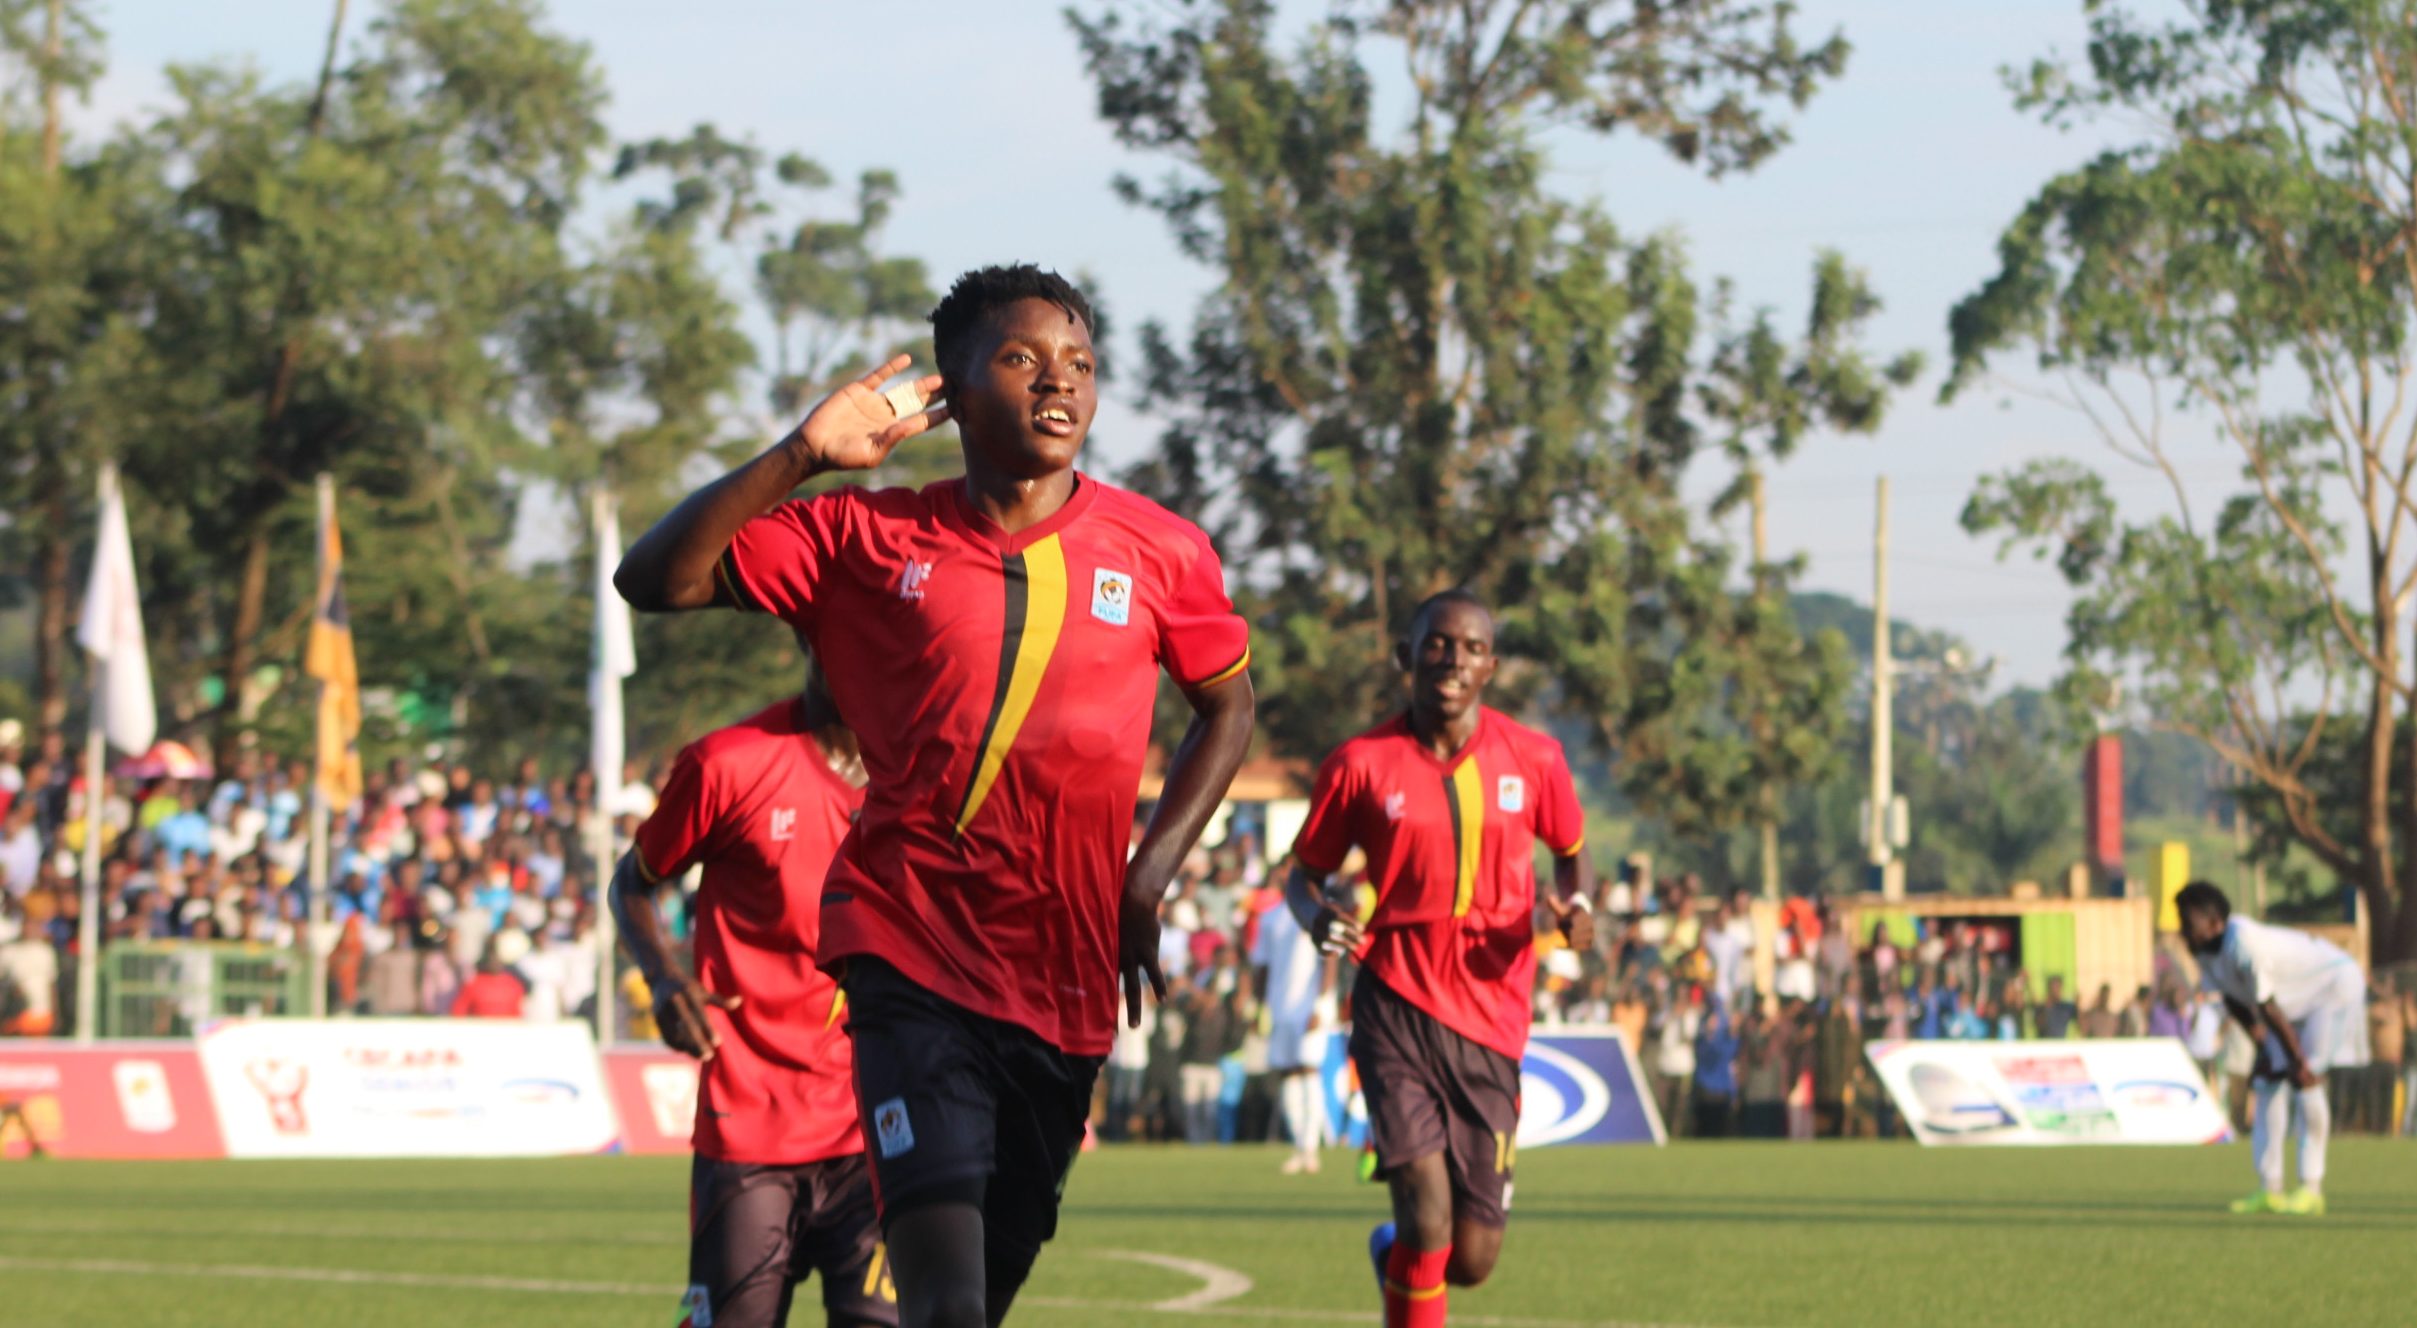 CECAFA Senior Challenge Cup 2019: Uganda defeats Somalia in second match